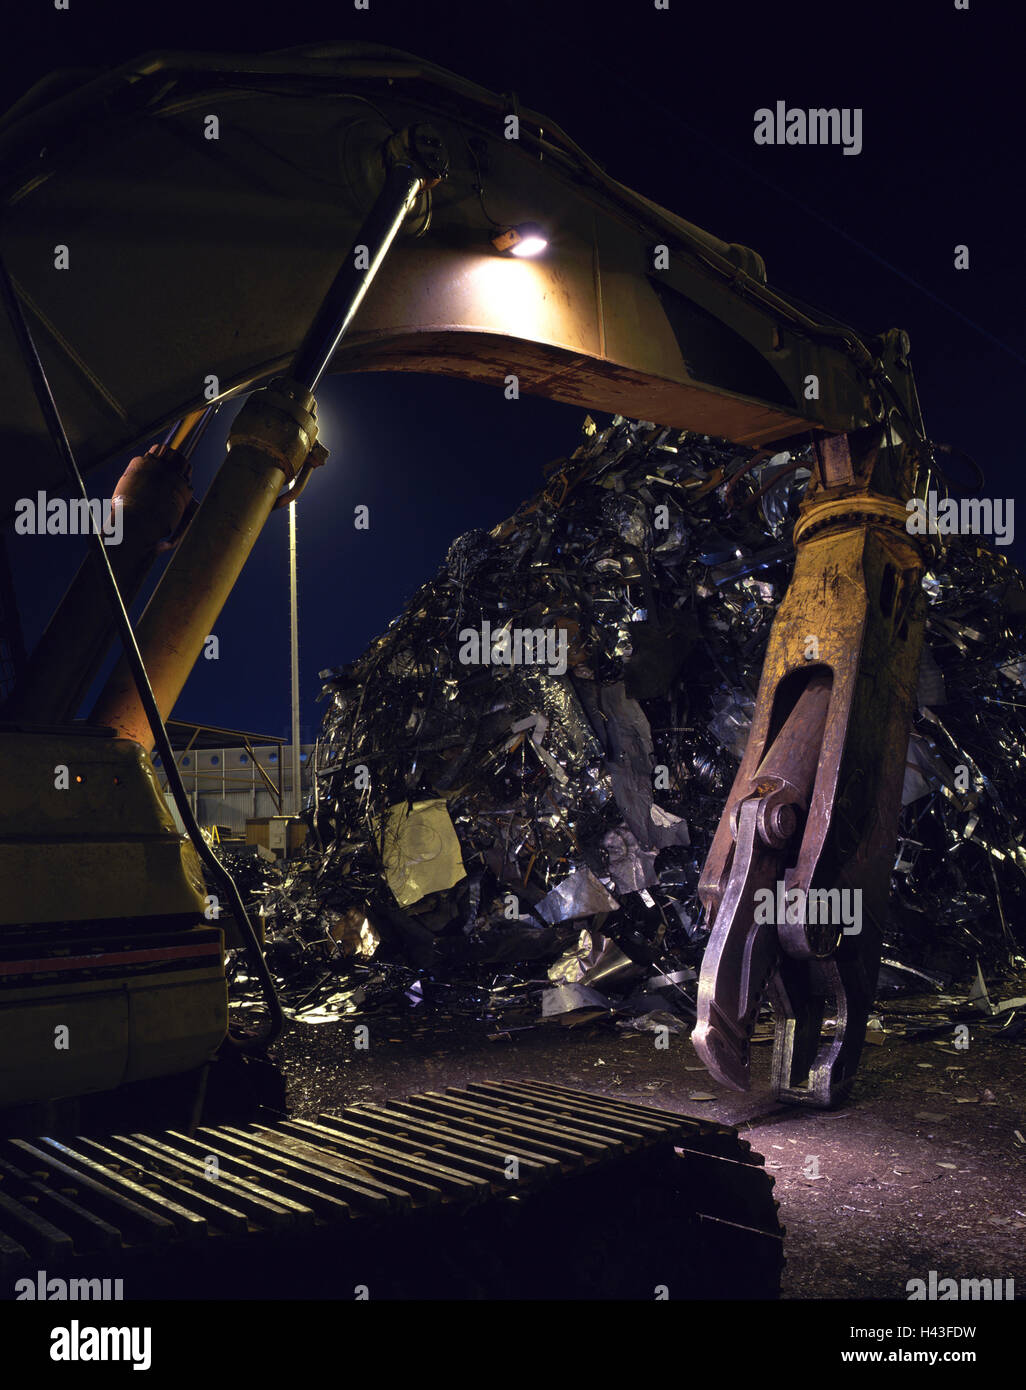 Mechanical grabber in junkyard at night Stock Photo